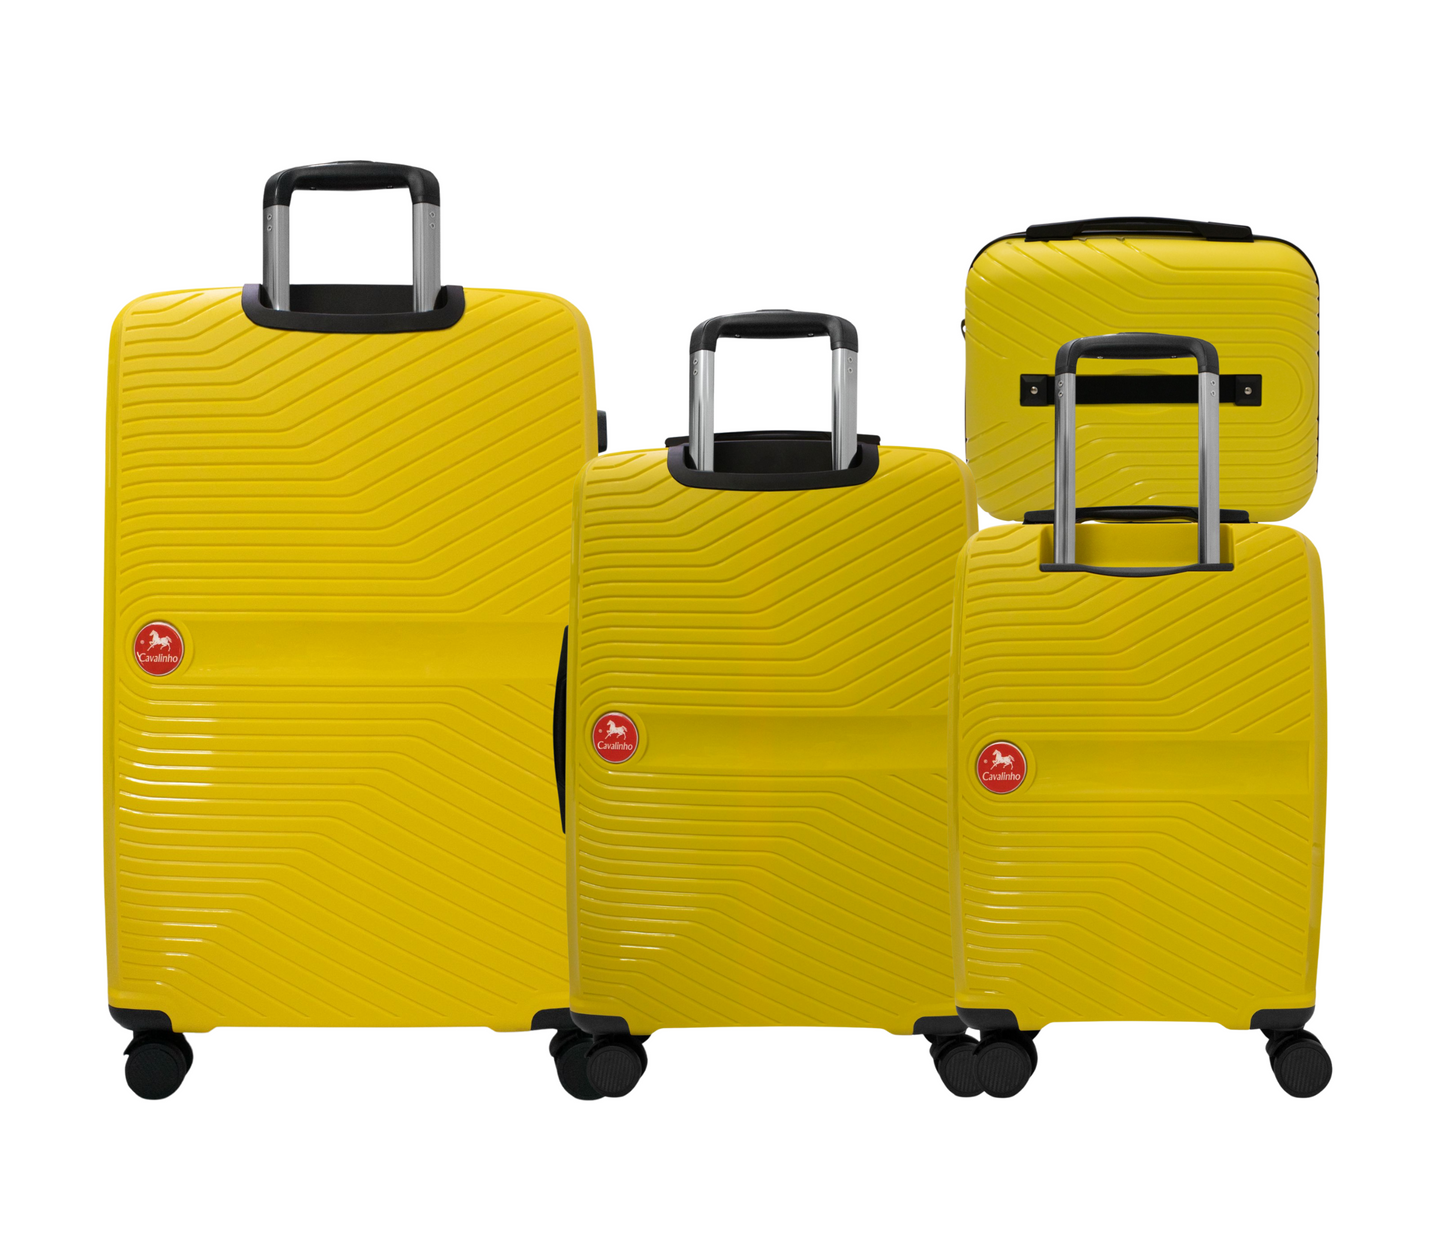 Cavalinho Canada & USA 4 Piece Set of Colorful Hardside Luggage (15", 19", 24", 28") - Yellow - 68020004.08.S4_3